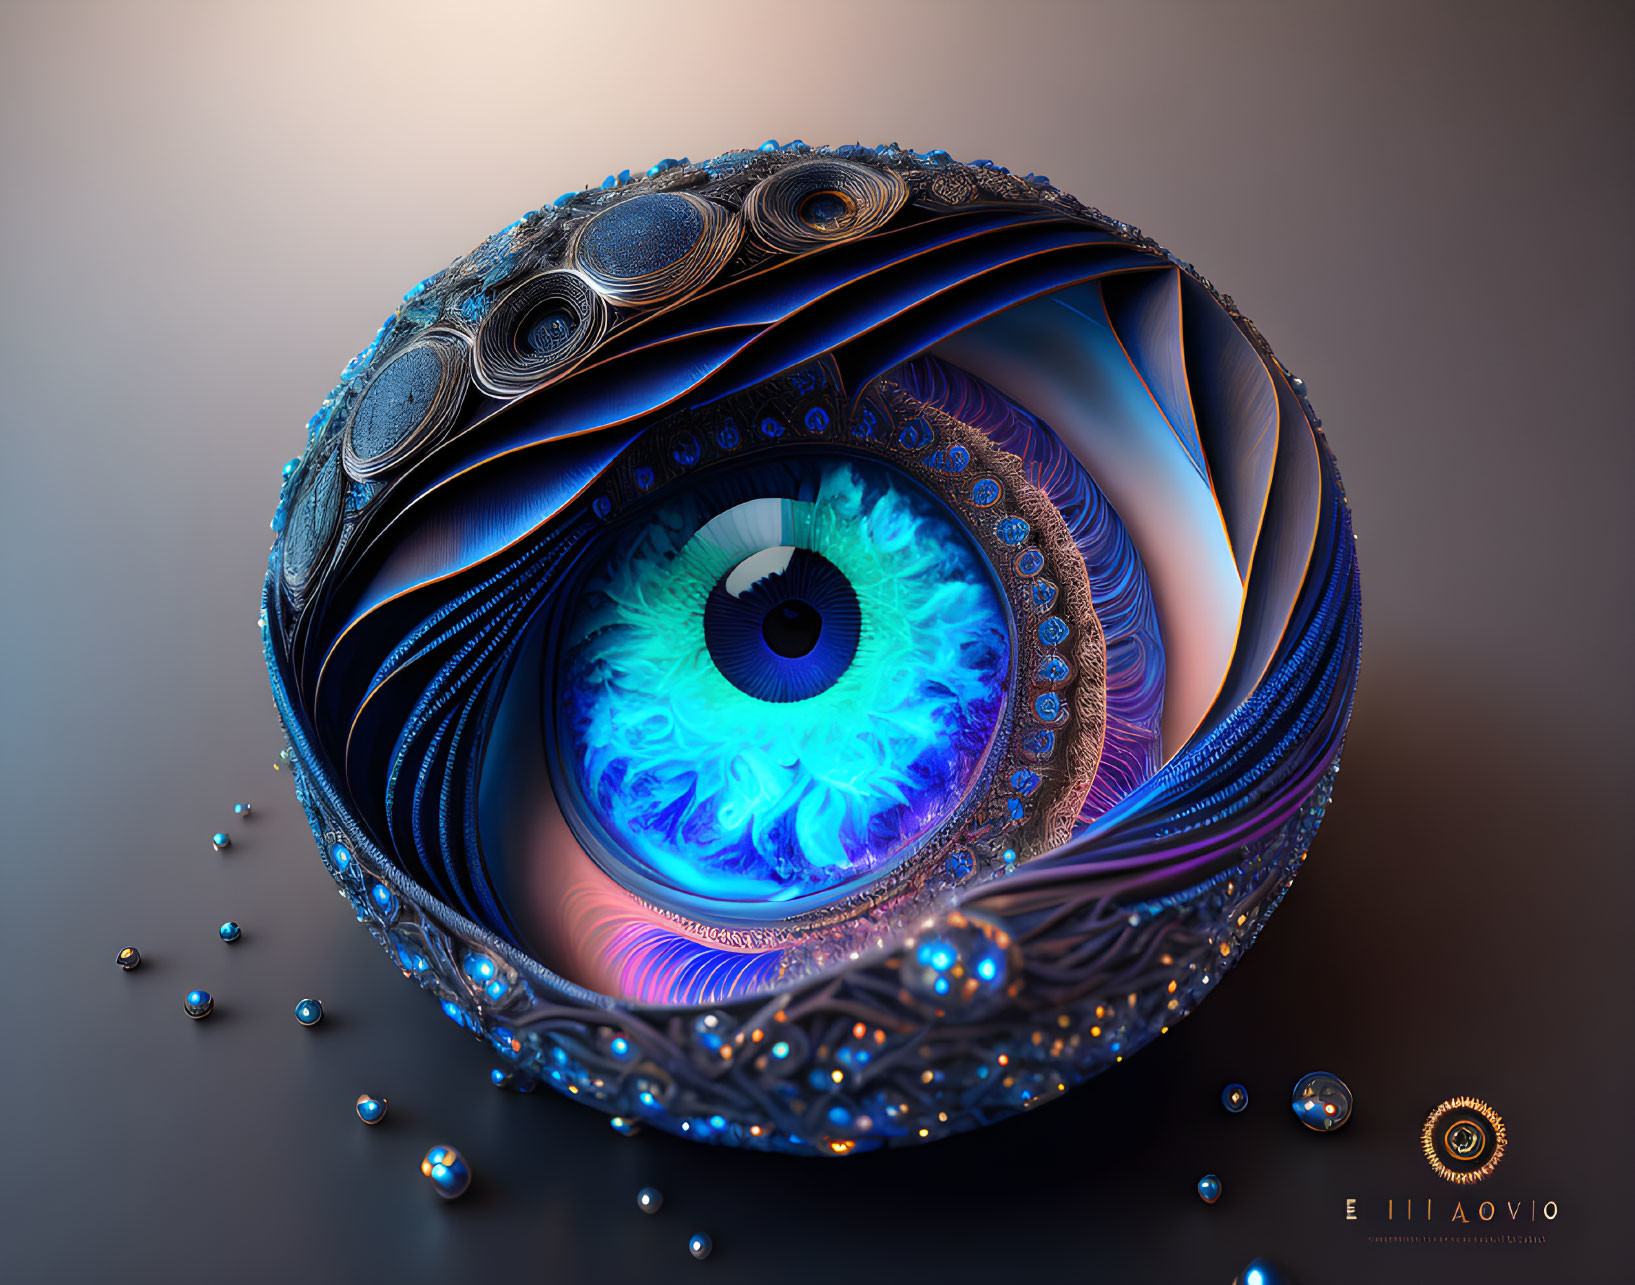 Surreal digital artwork: Vibrant blue eye, metallic layers, glossy spheres